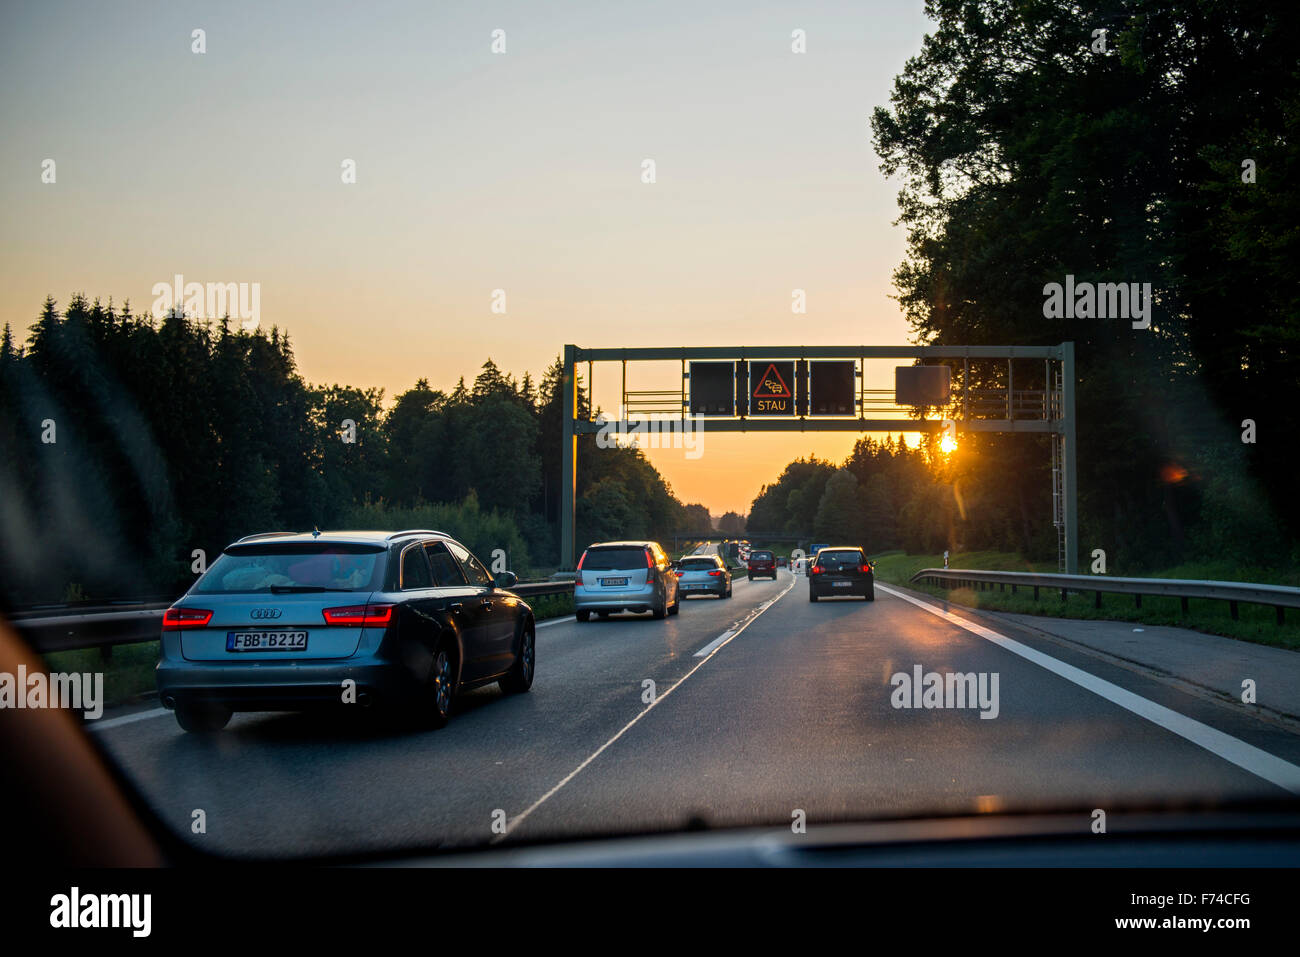 Traffic Jam on German Autobahn - Road Sign 'STAU' Stock Photo